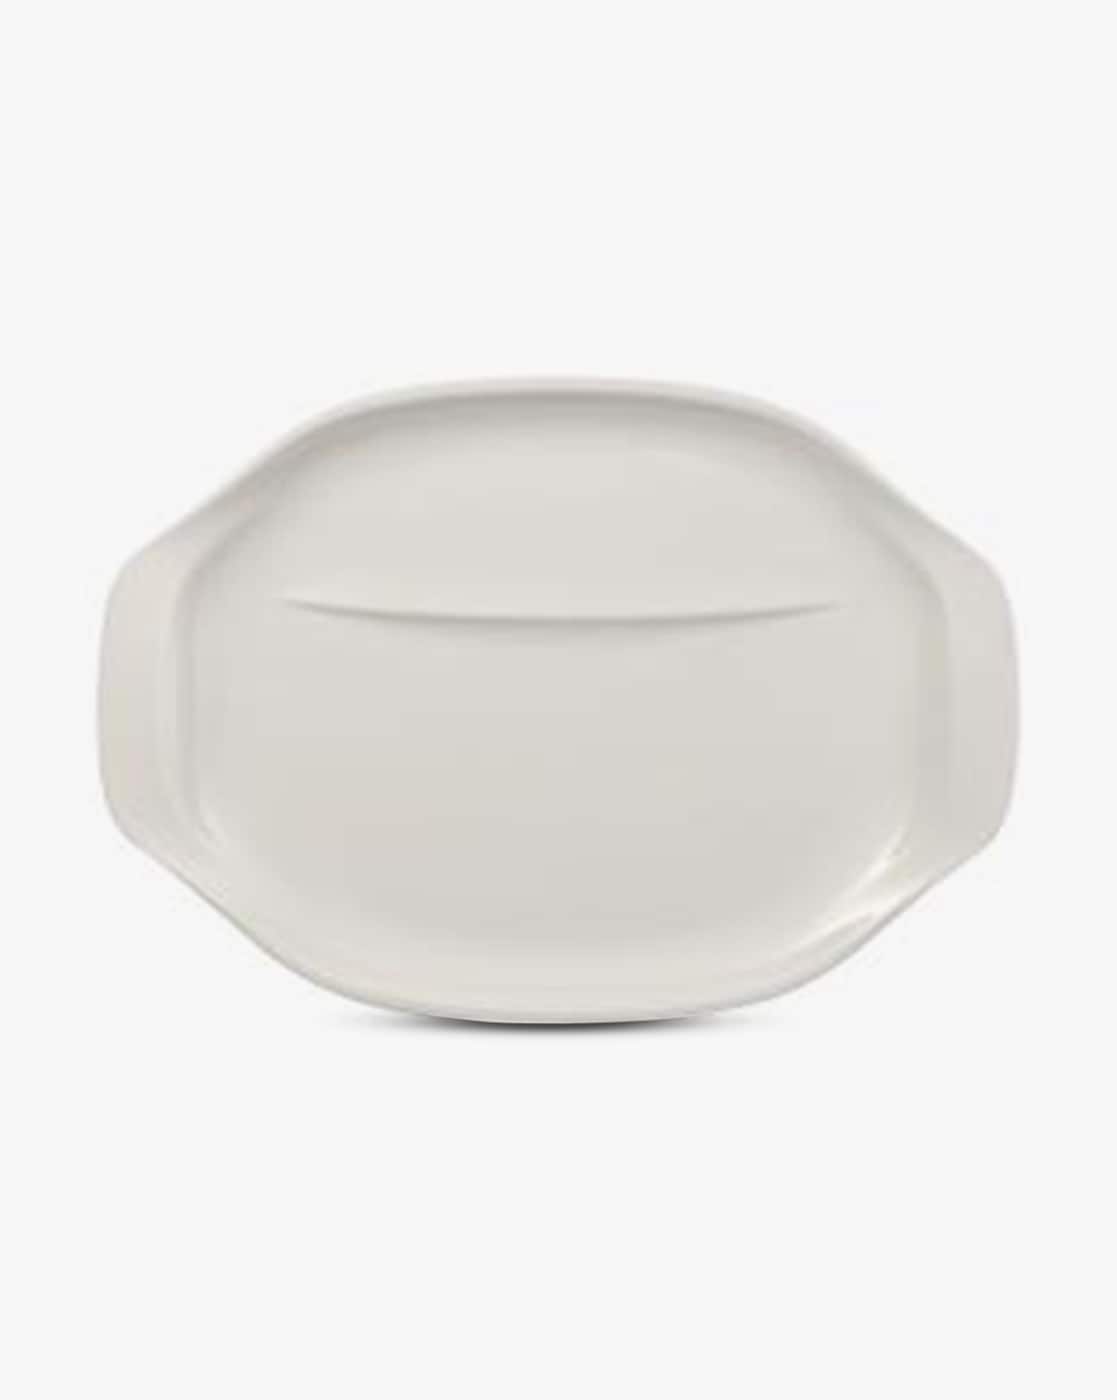 2 Person Set 36 x 25 x 2.5 cm White Premium Porcelain Villeroy & Boch BBQ Passion All-round Barbecue Plate 